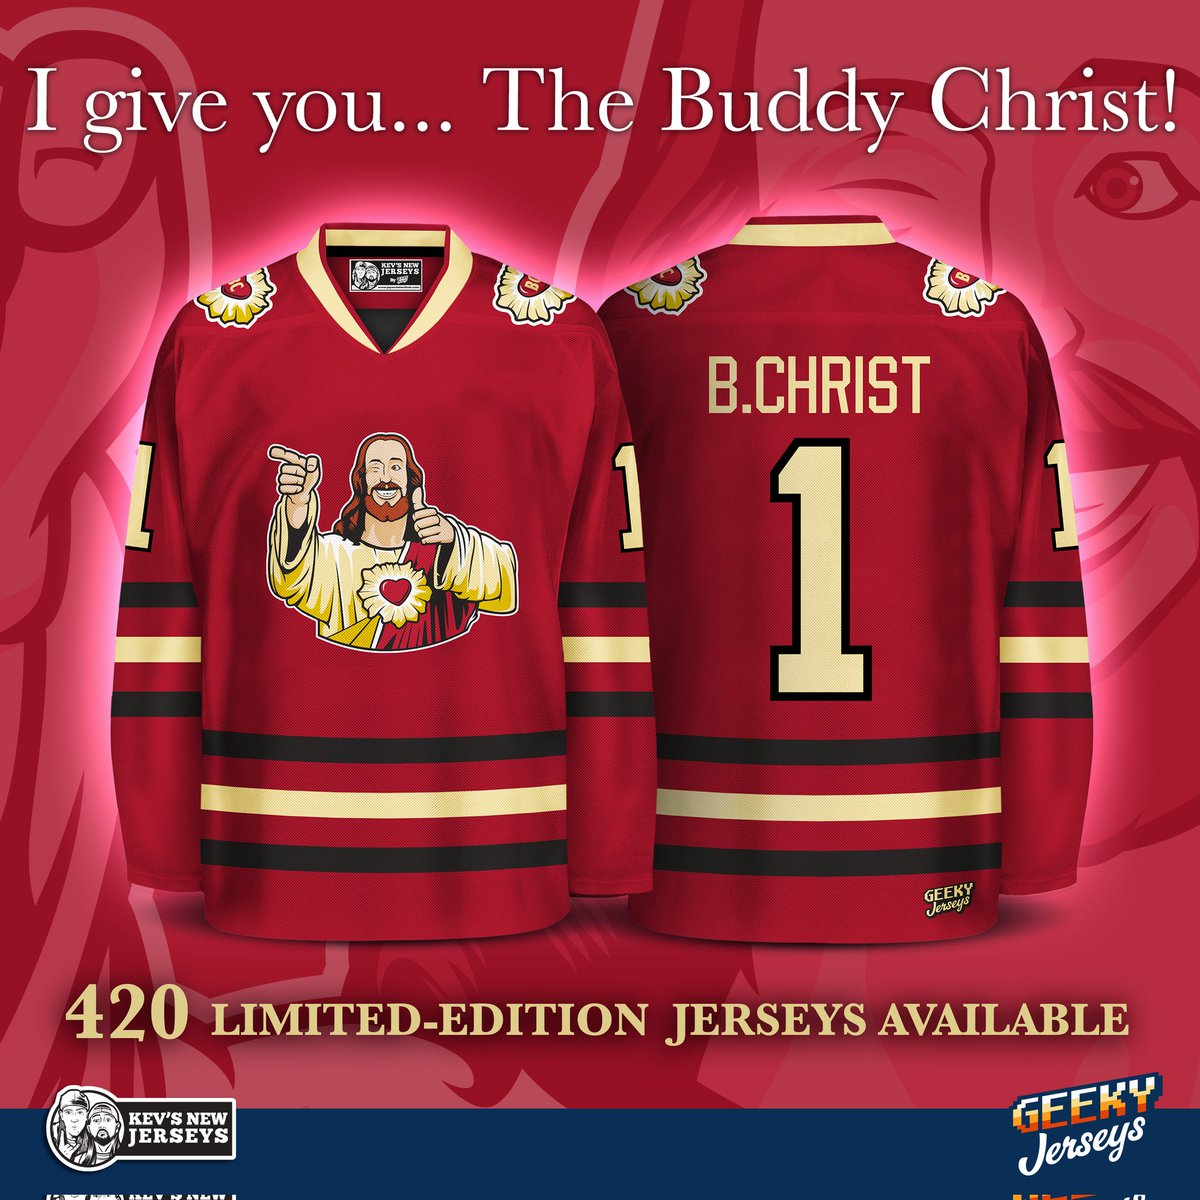 I give you... The Buddy Christ! ❤️
Get yours now at GeekyJerseys.com
#buddychrist #dogma #kevinsmith #clerks #jayandsilentbob #hockeyjersey #viewaskew 
@ThatKevinSmith